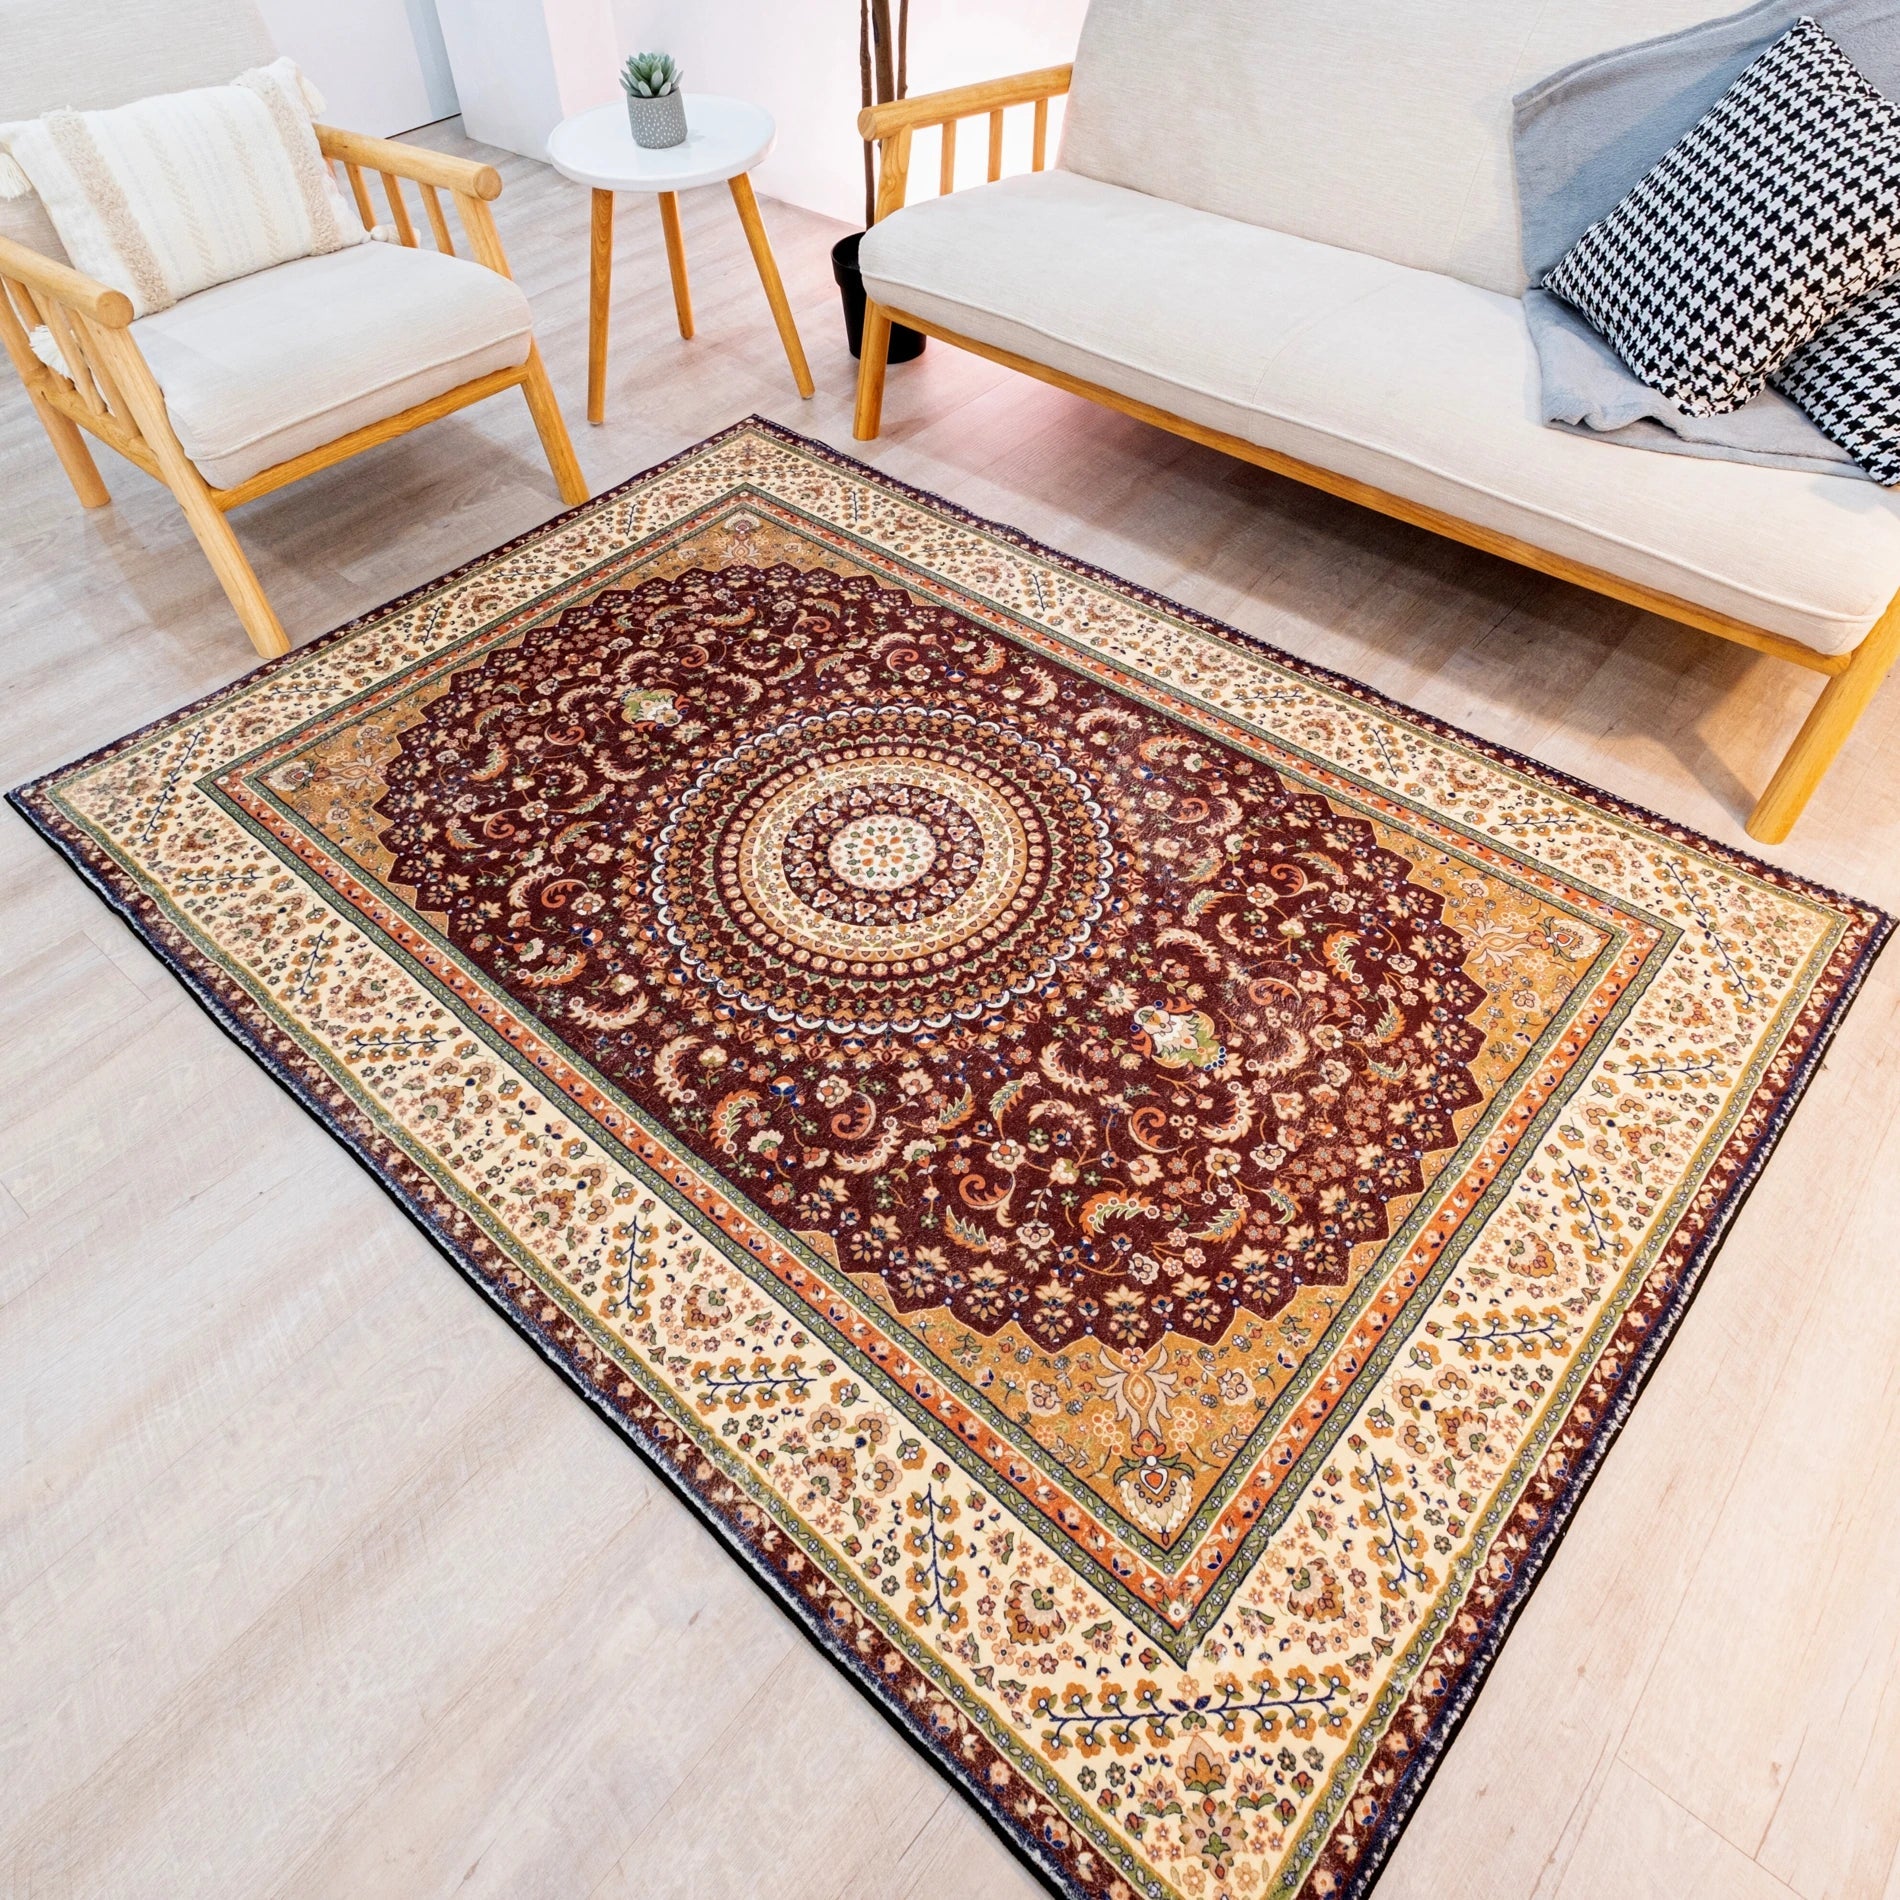 P-8180 Persian Carpet - The Carpetier™